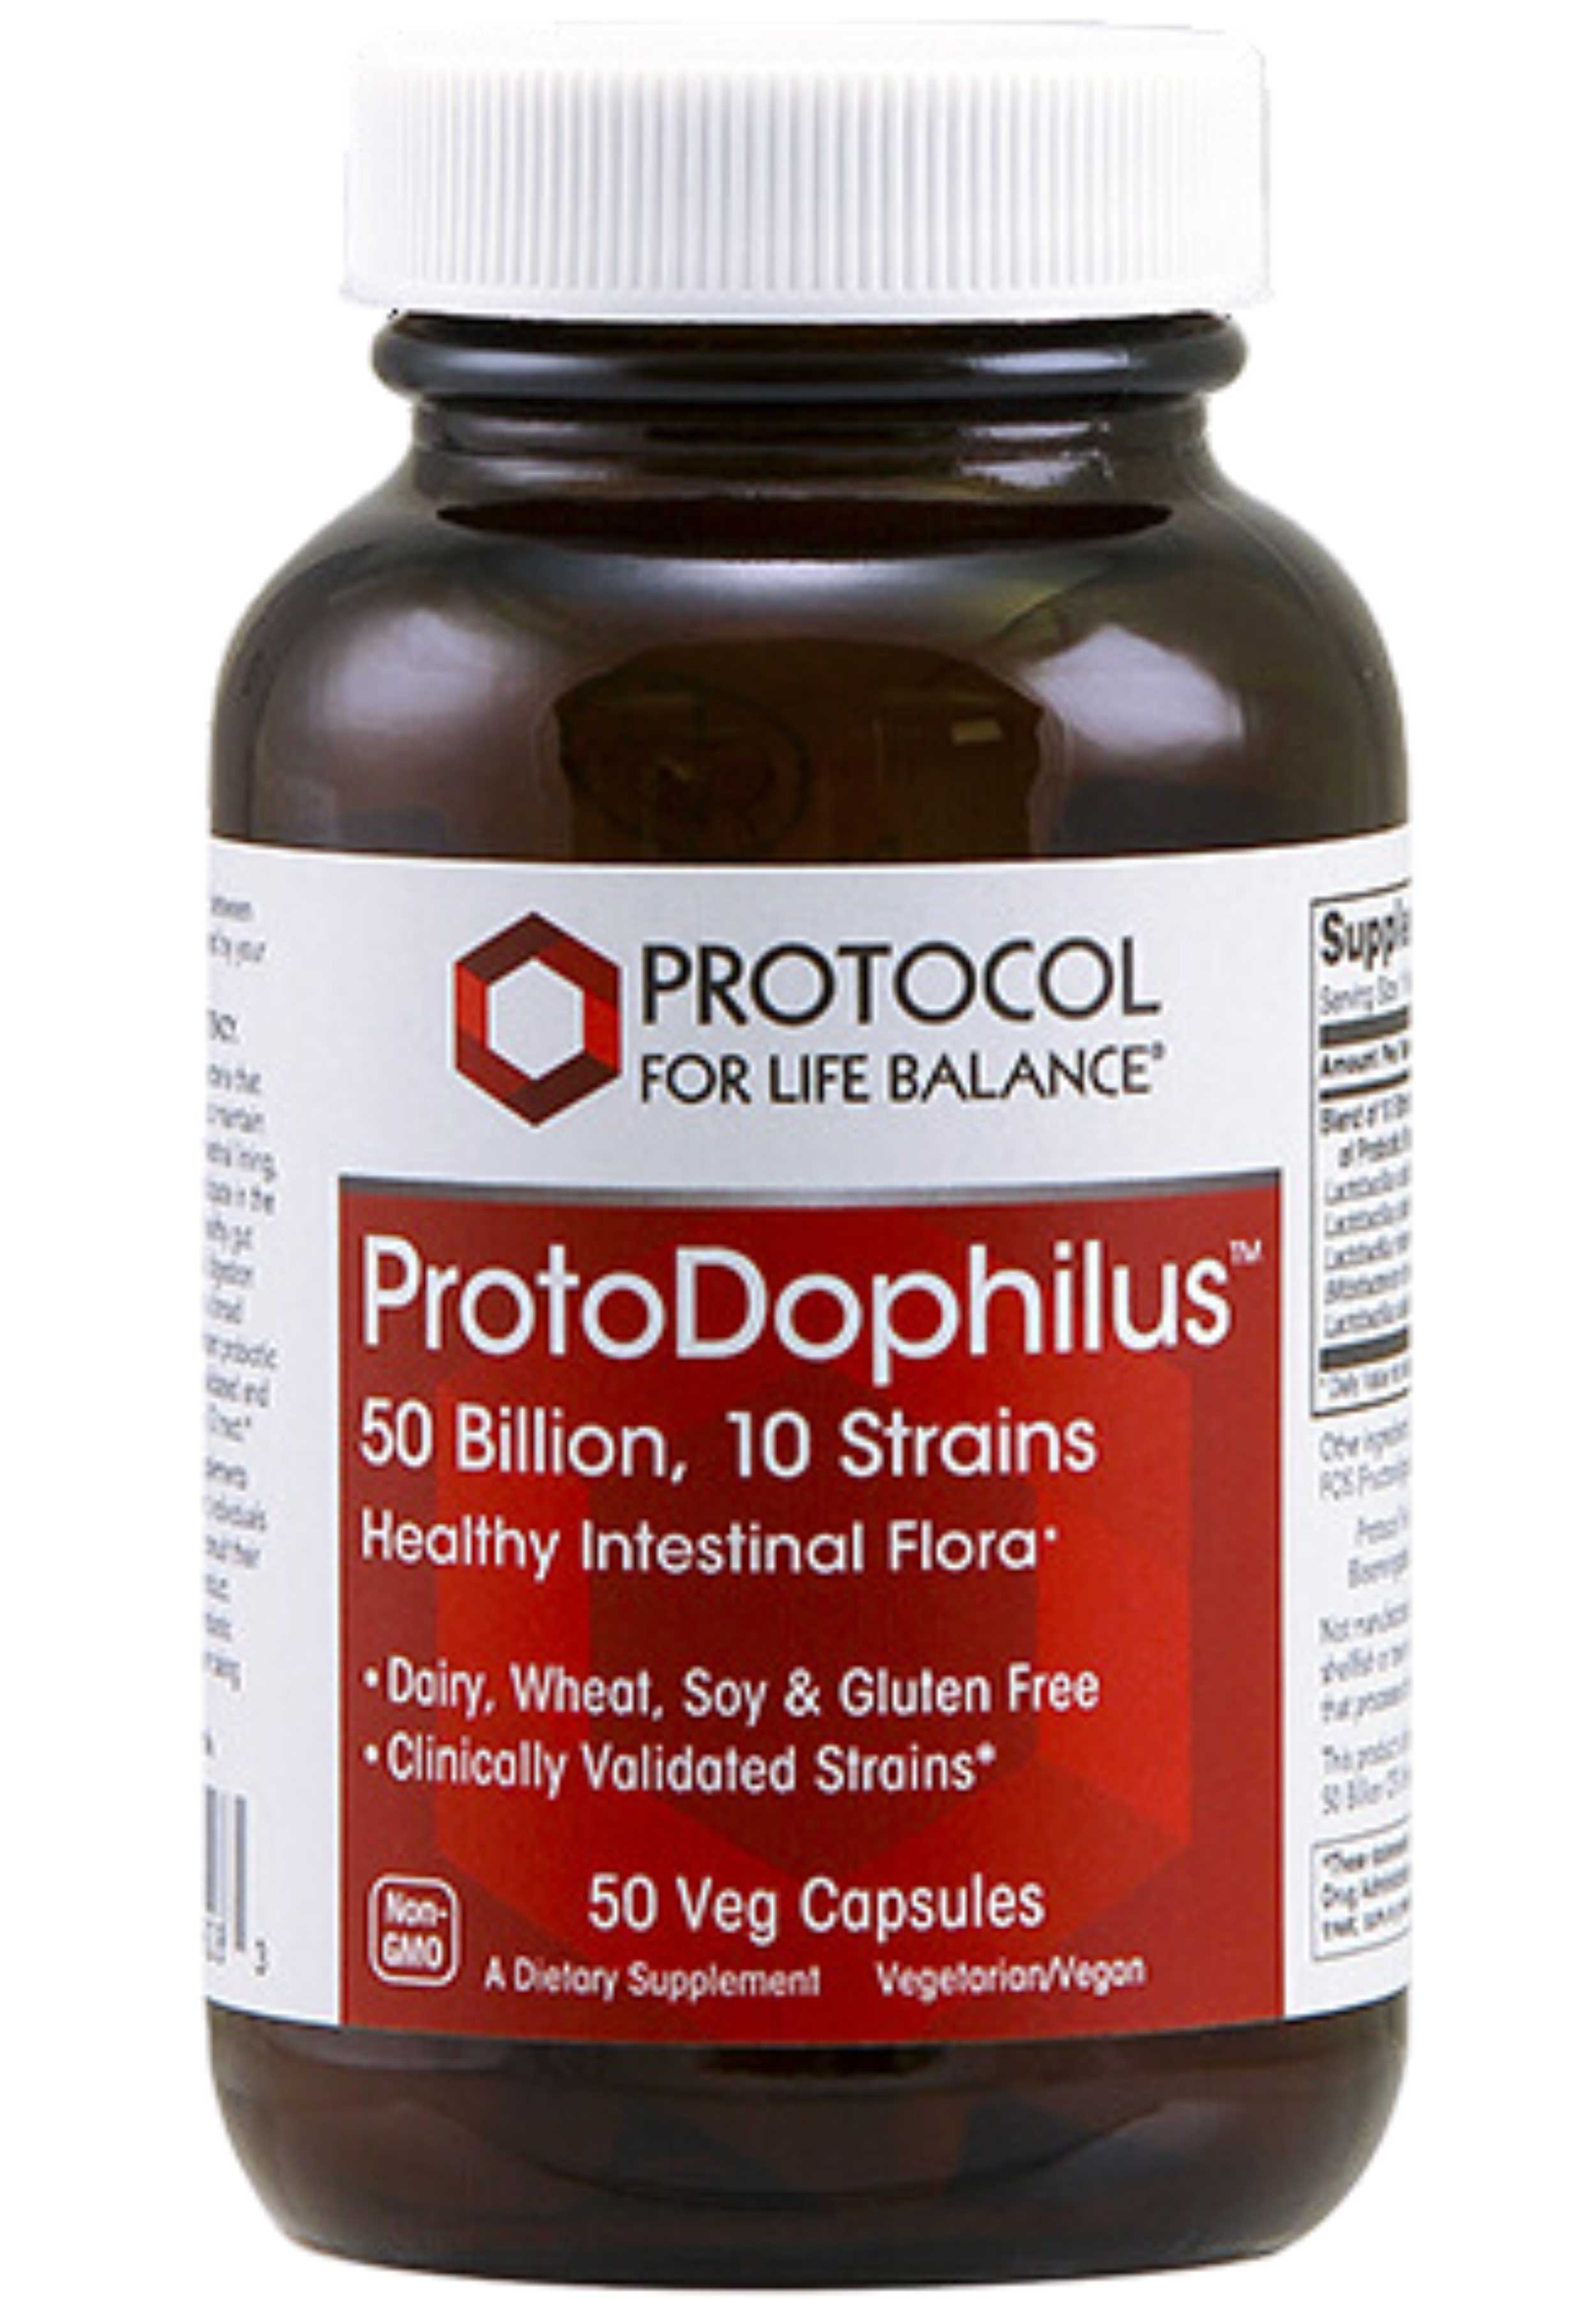 Protocol for Life Balance ProtoDophilus 50 Billion, 10 Strains